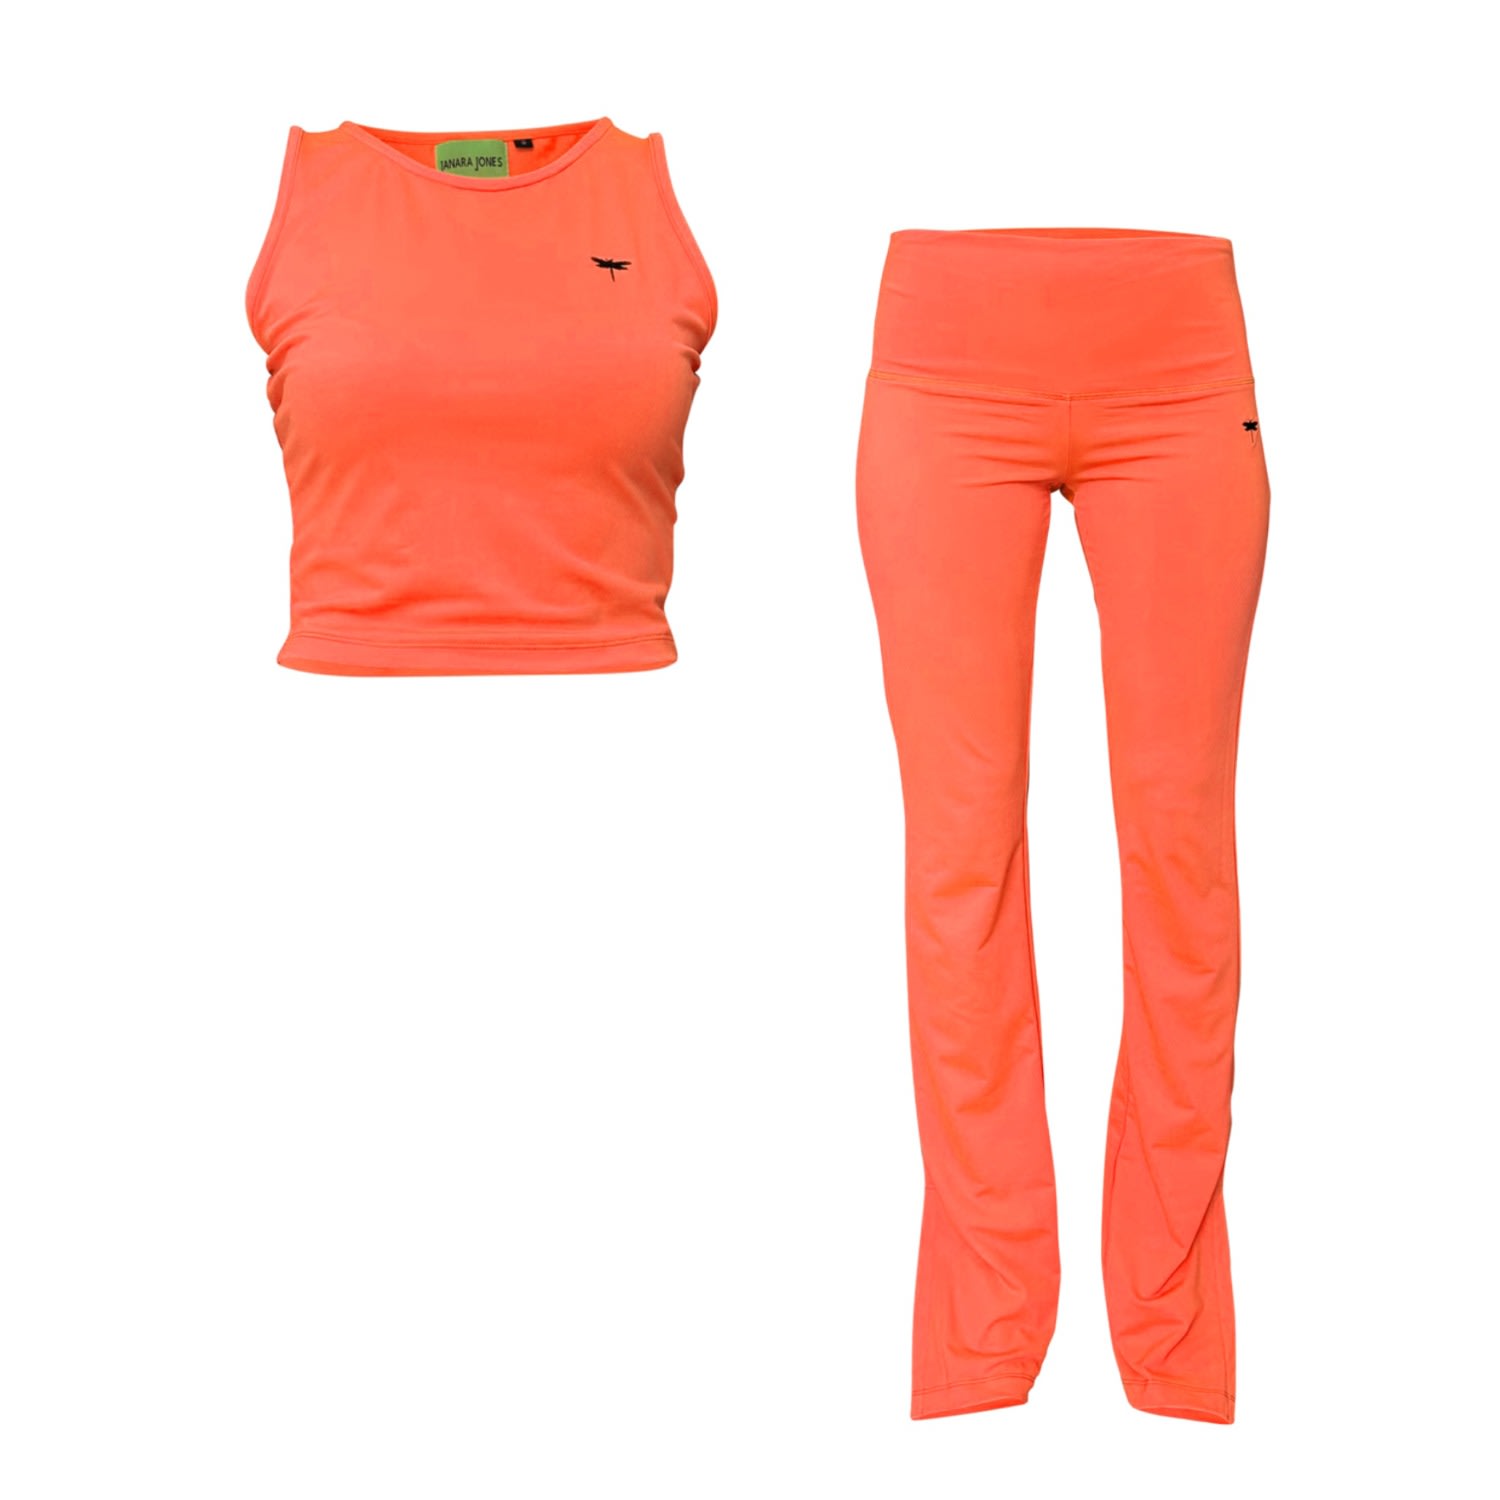 Yellow / Orange Neon Orange Stretchy Sport Matching Set With Flare Trousers Small Janara Jones